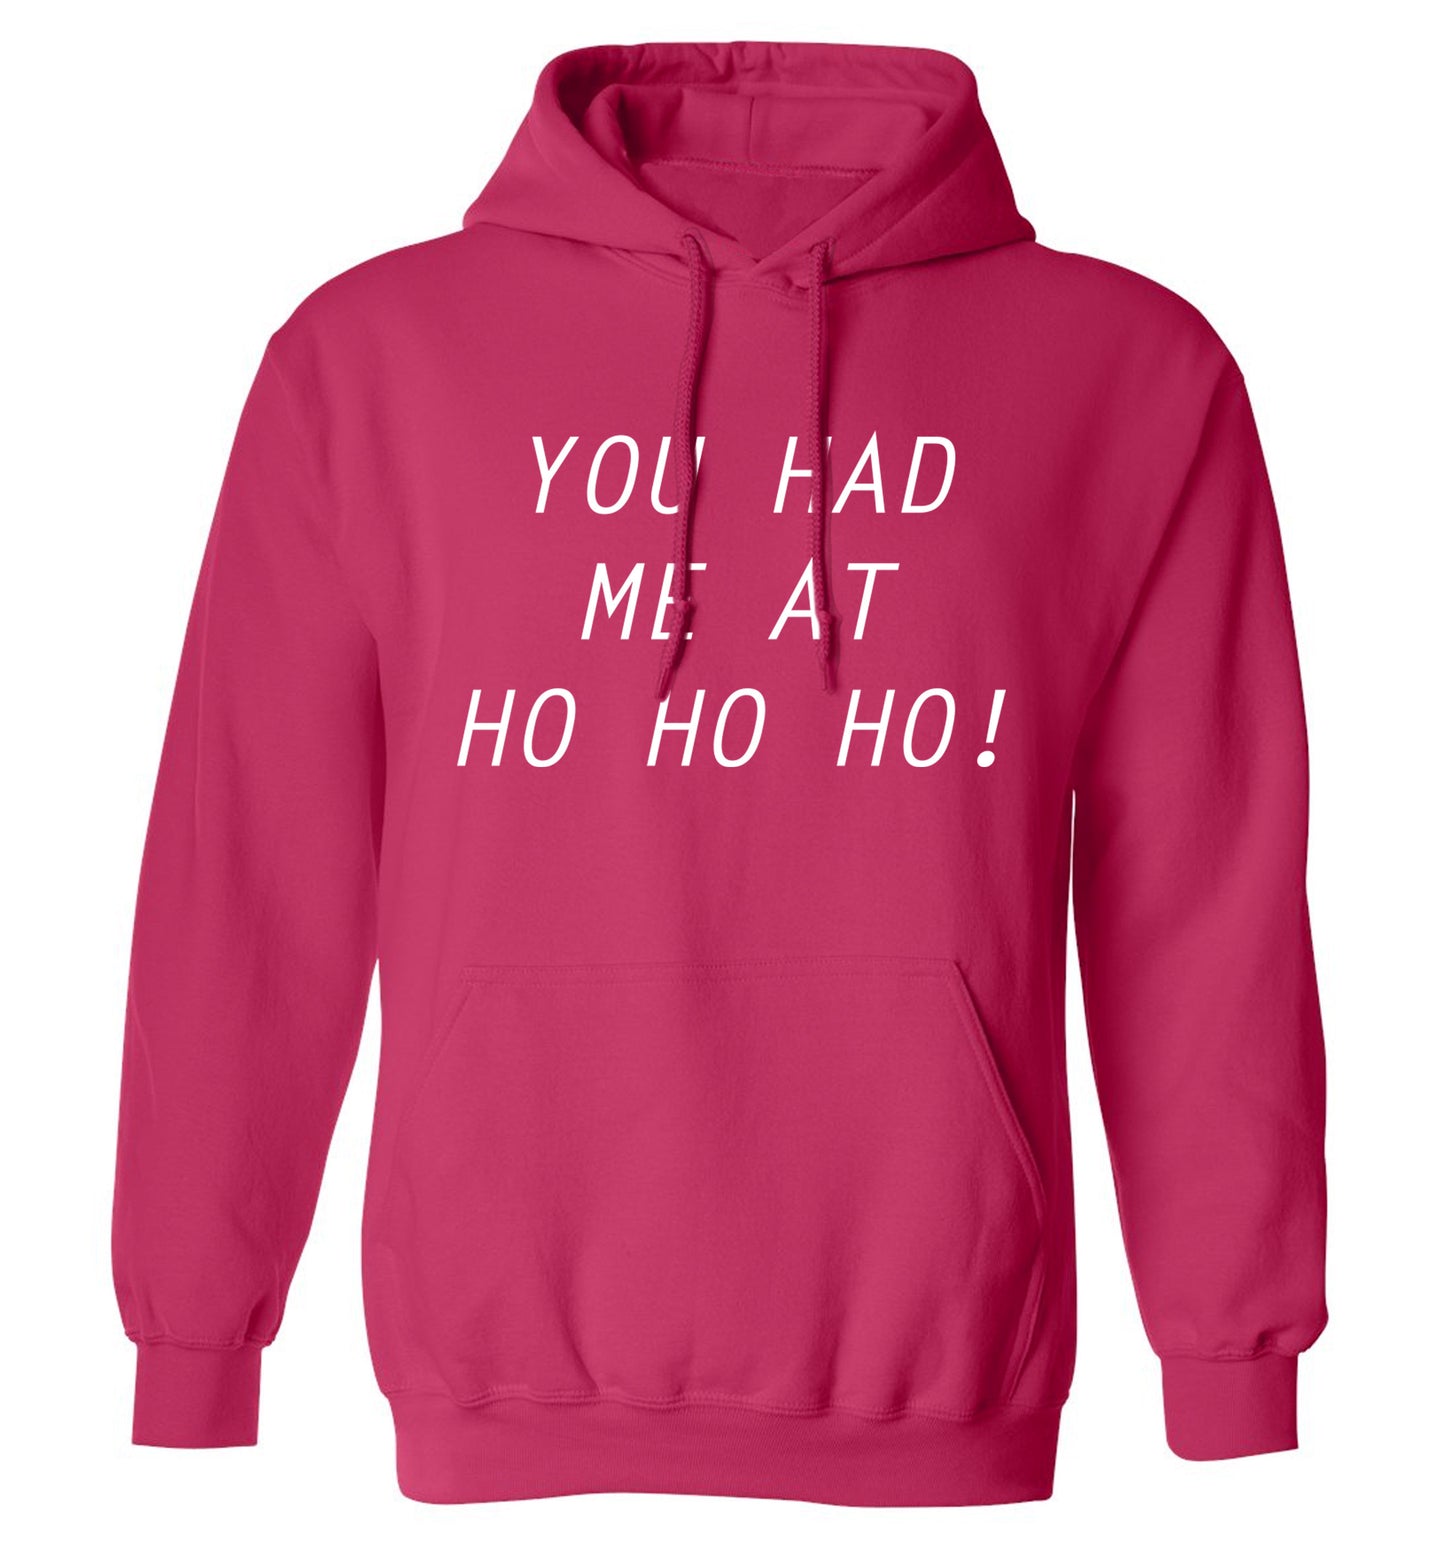 You had me at ho ho ho adults unisex pink hoodie 2XL